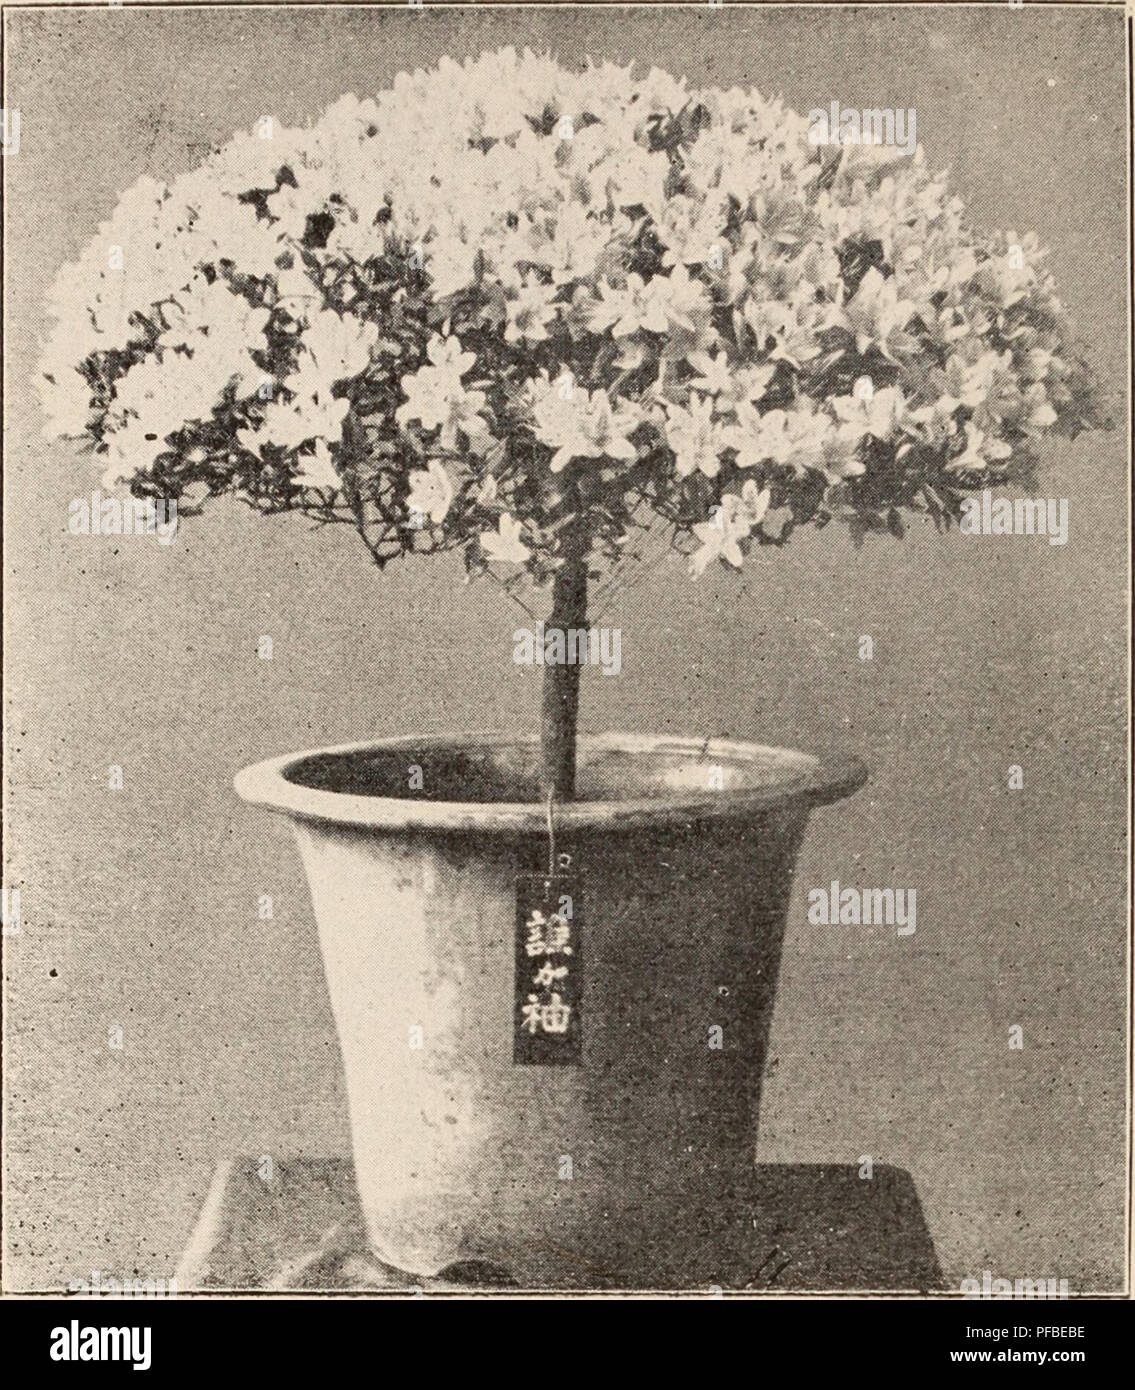 . Descriptive catalogue of flowering, ornamental trees, shrubs, bulbs, herbs, climbers, fruit trees, &amp;c., &amp;c., &amp;c. / for sale by the Yokohama Nursery Co., Limited.. Nursery Catalogue. 24 CATALOGUE OF TMK YOKOHAMA NURSERY Co., Ltd. (1909).. 24. 26. 27, •28. 29. AZALEA INHICUM, **TAGASODE. Dwarfed specimen plant. Azale&lt;a indicnn), Matsushima, white and red striped, and spotted — per 10, $1.30, per ICO, $11.00. Azalea irulicmu, ' Kin-no-zai, salmon red double, free grower —per 10, $1.75 ; per 100. $15.00. Azalea indicuni, Komanyo, double red, slow growing plant, good for pot cultur Stock Photo